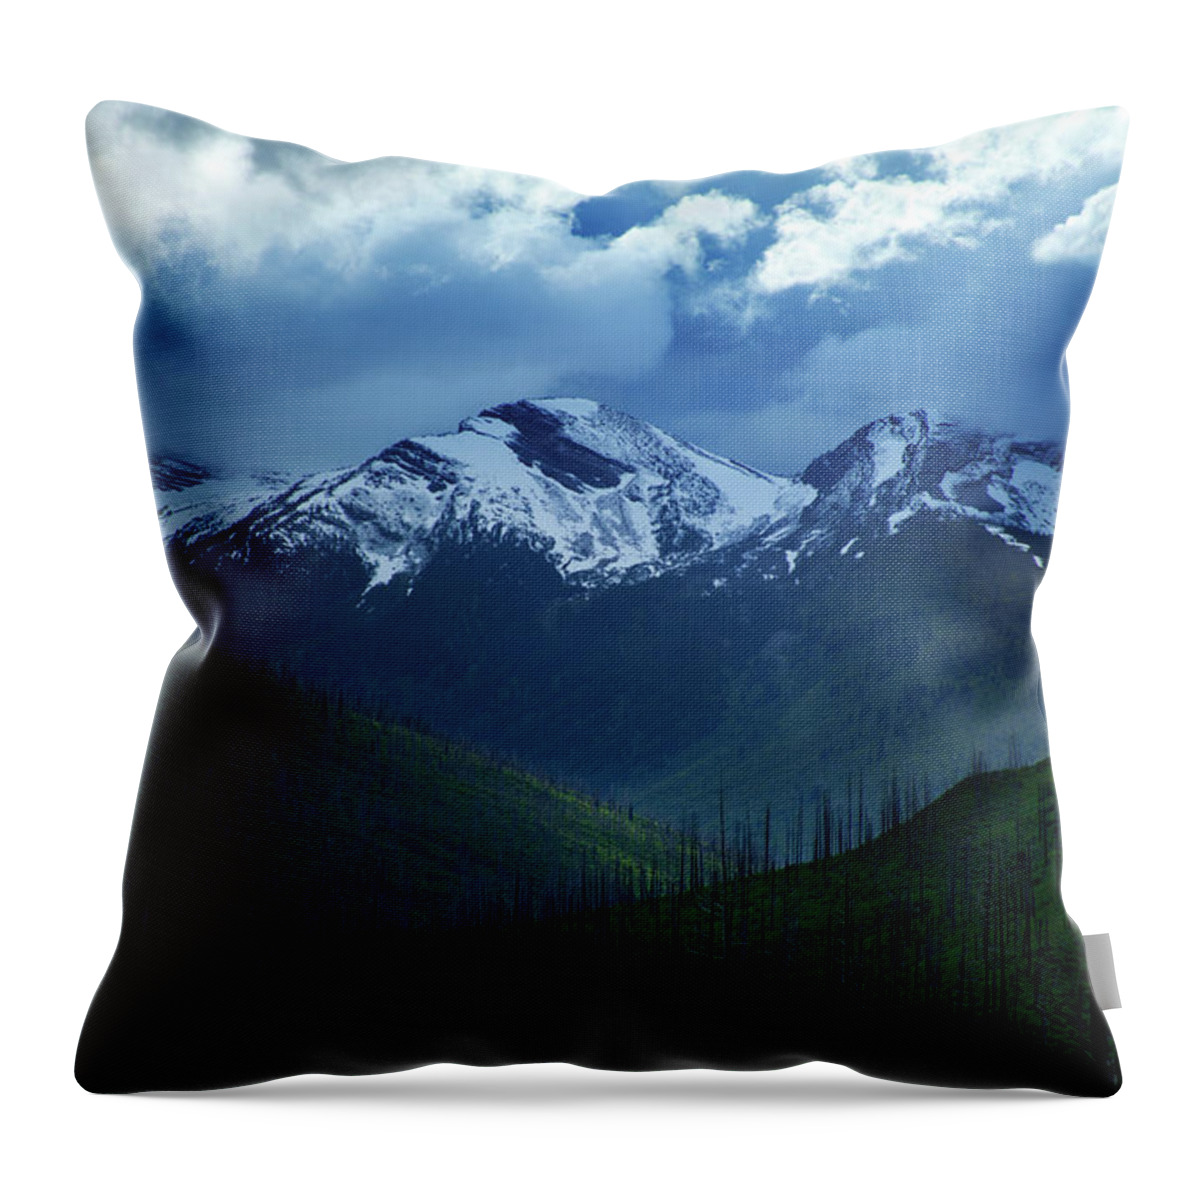 Mountains Throw Pillow featuring the photograph Montana Mountain Vista #2 by David Chasey